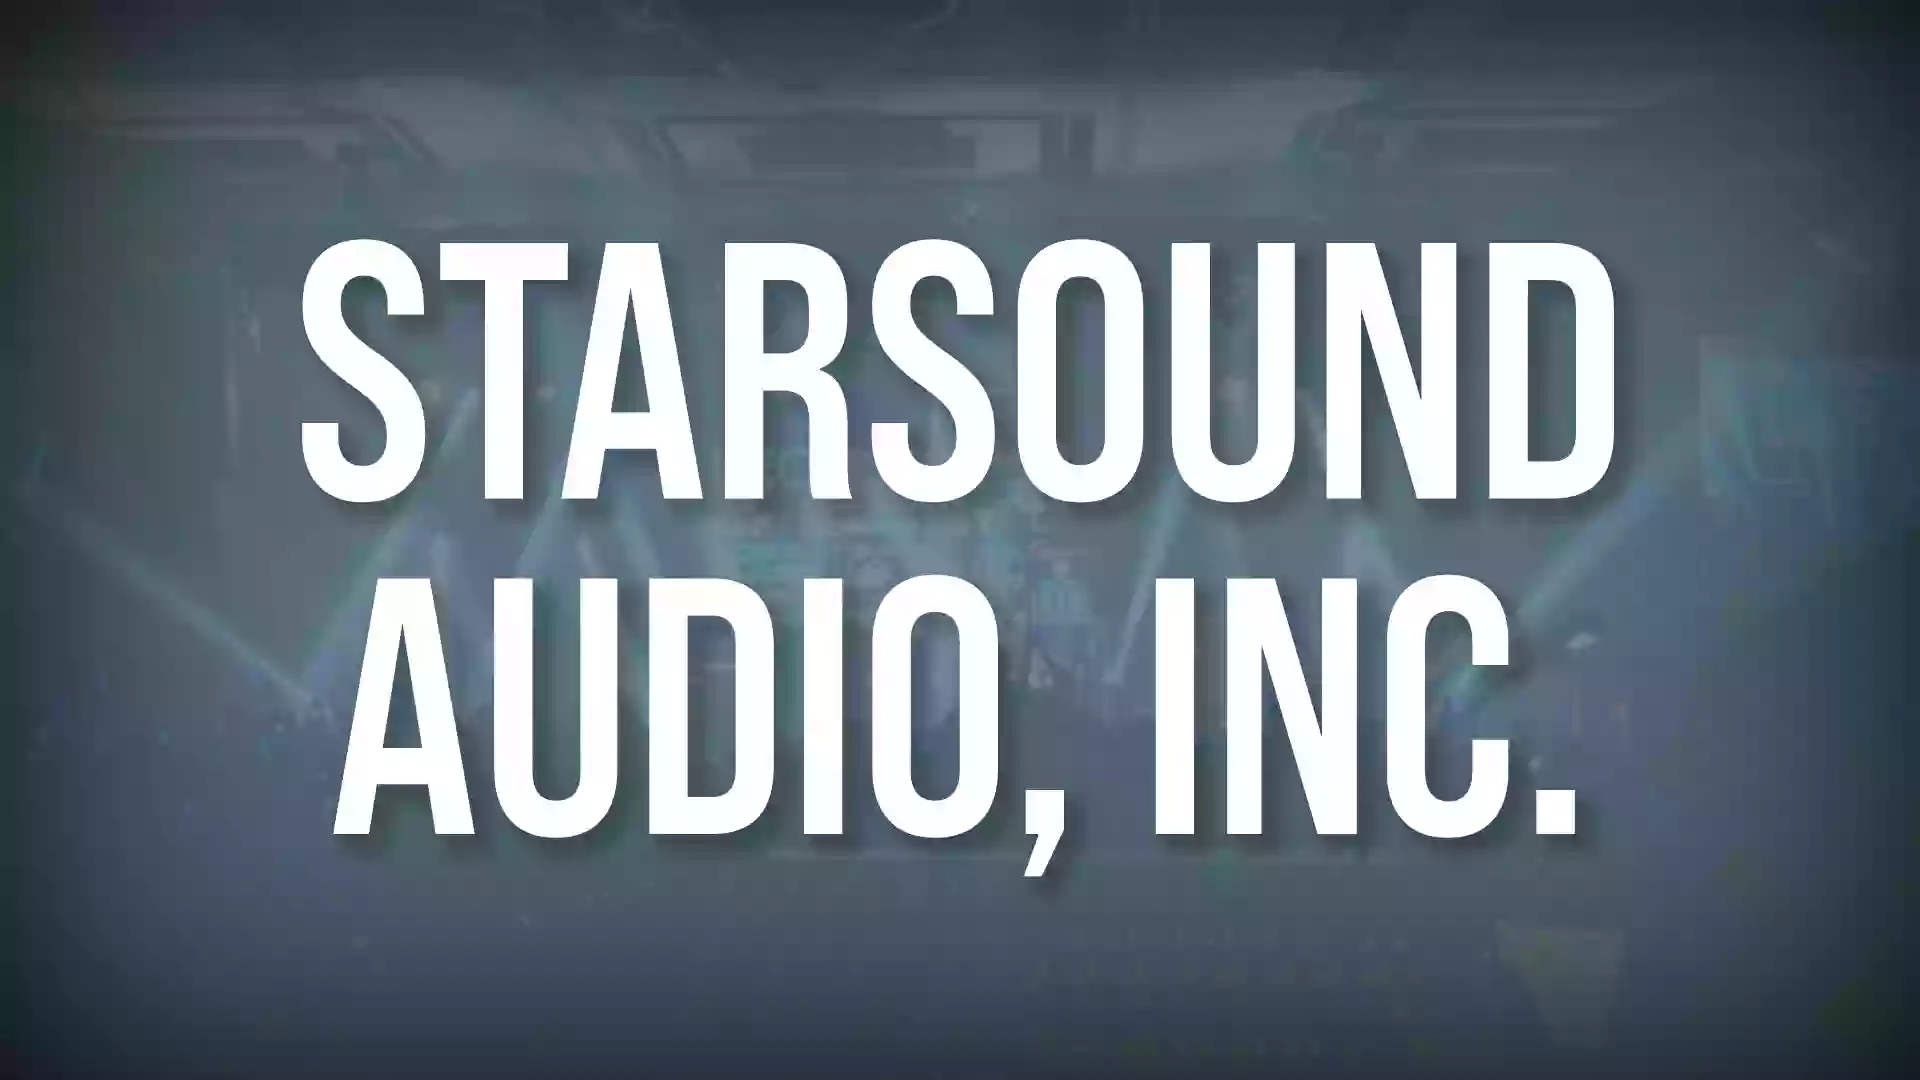 Starsound Audio, Inc.